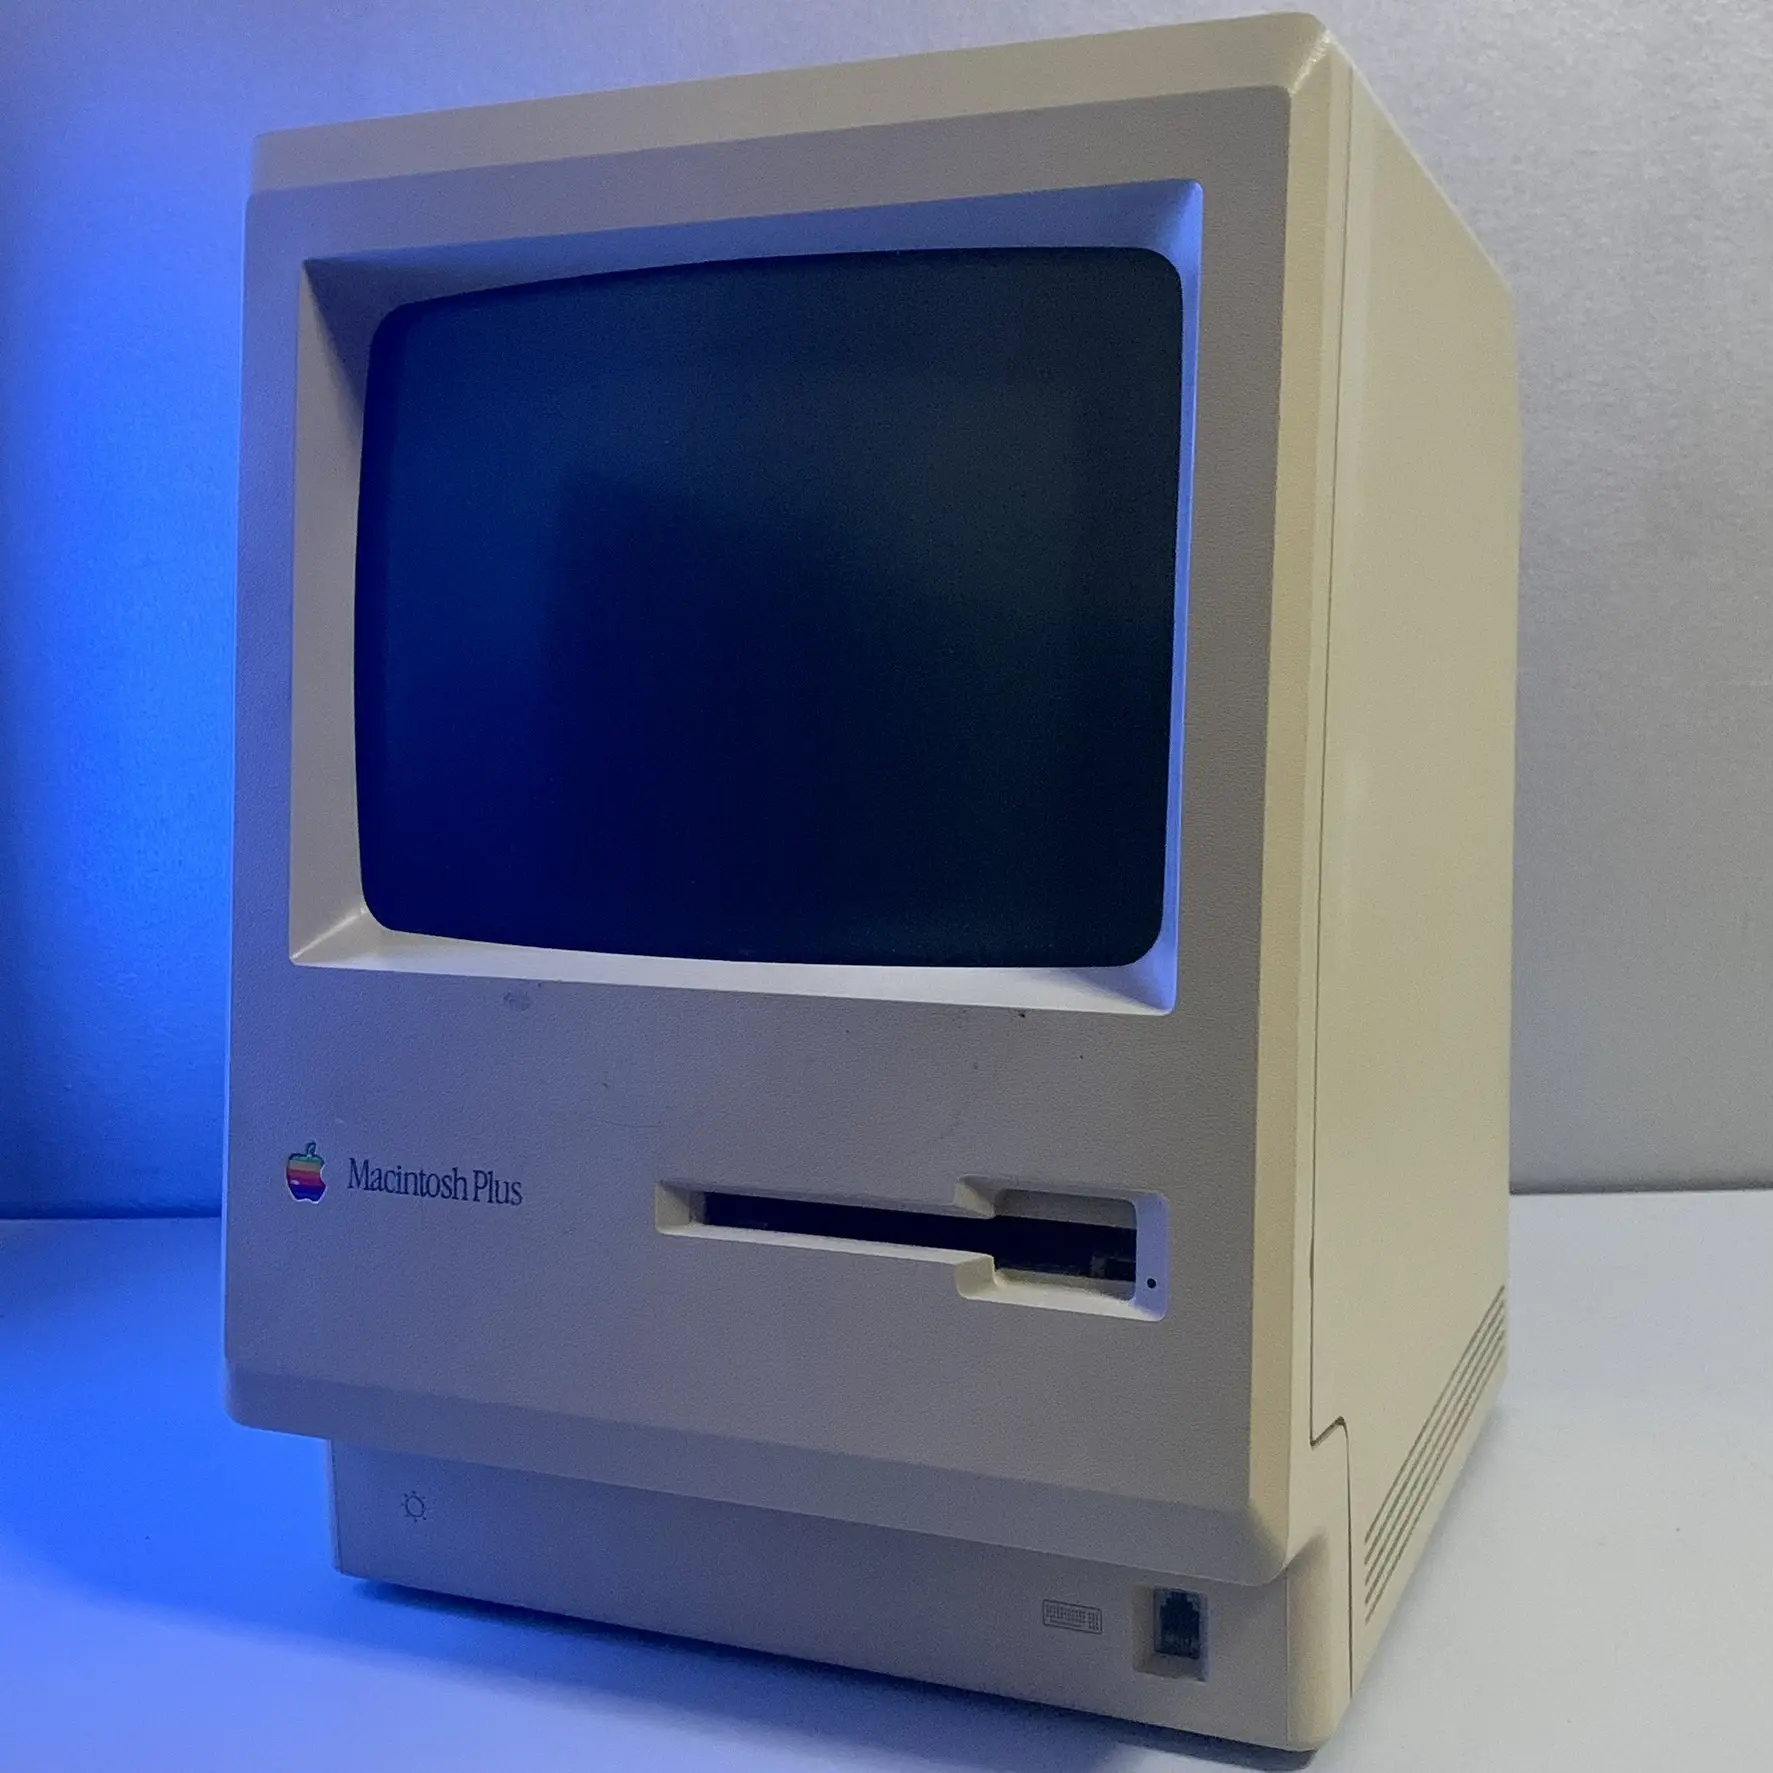 My Macintosh Plus.